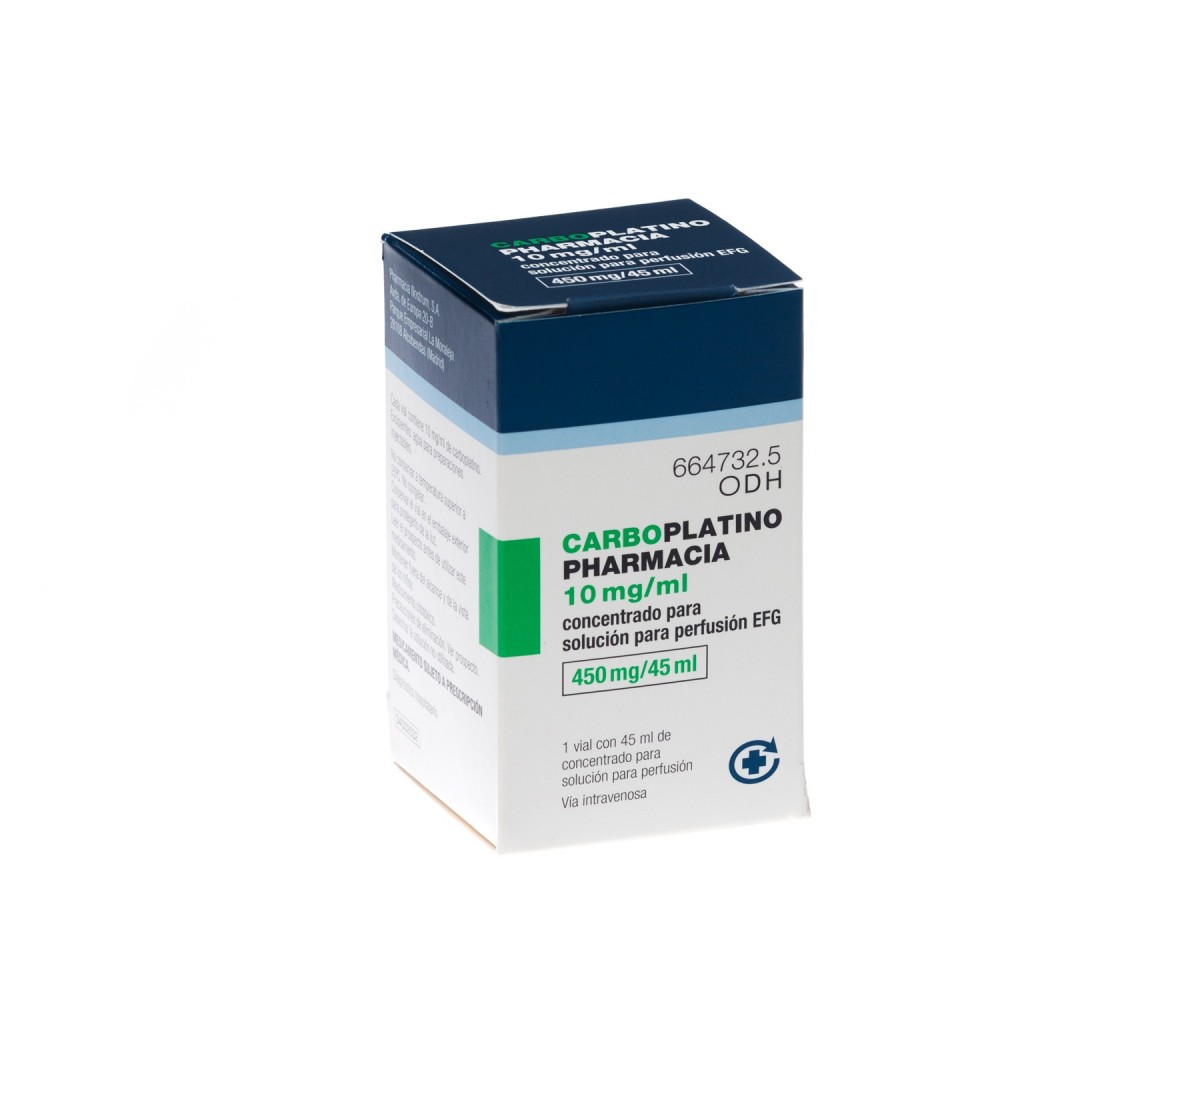 CARBOPLATINO PHARMACIA 10 mg/ml CONCENTRADO PARA SOLUCION PARA PERFUSION EFG, 1 vial de 5 ml fotografía del envase.